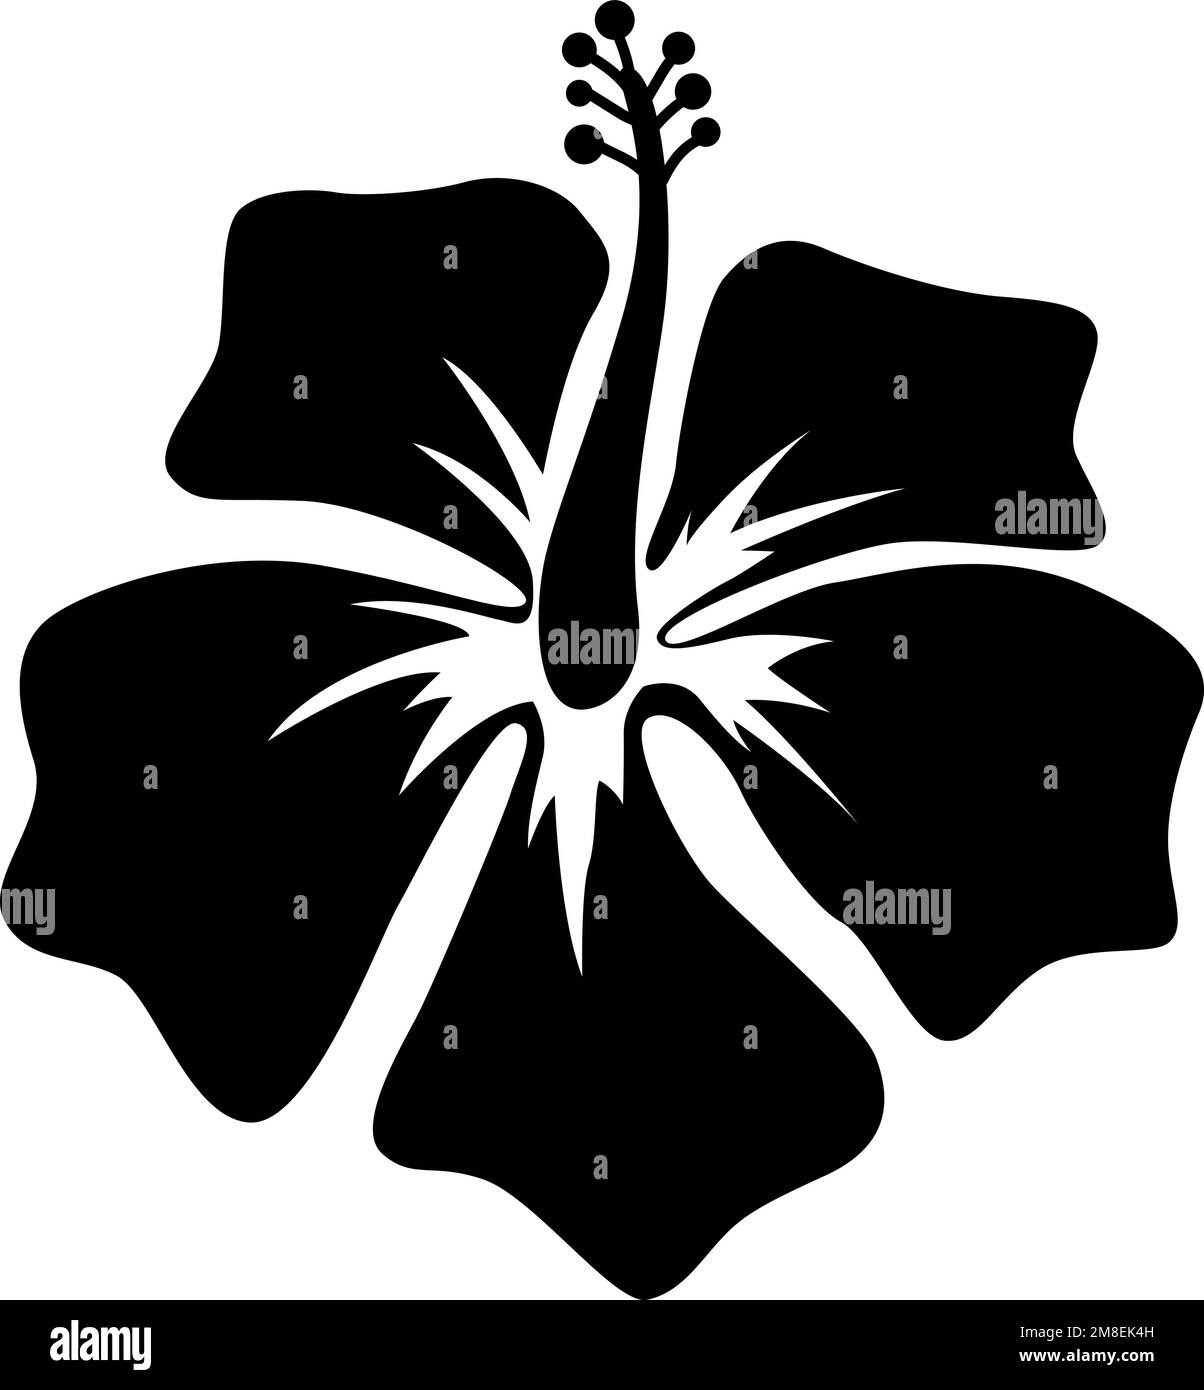 Illustration of hibiscus flower. Design element for logo, label, design ...